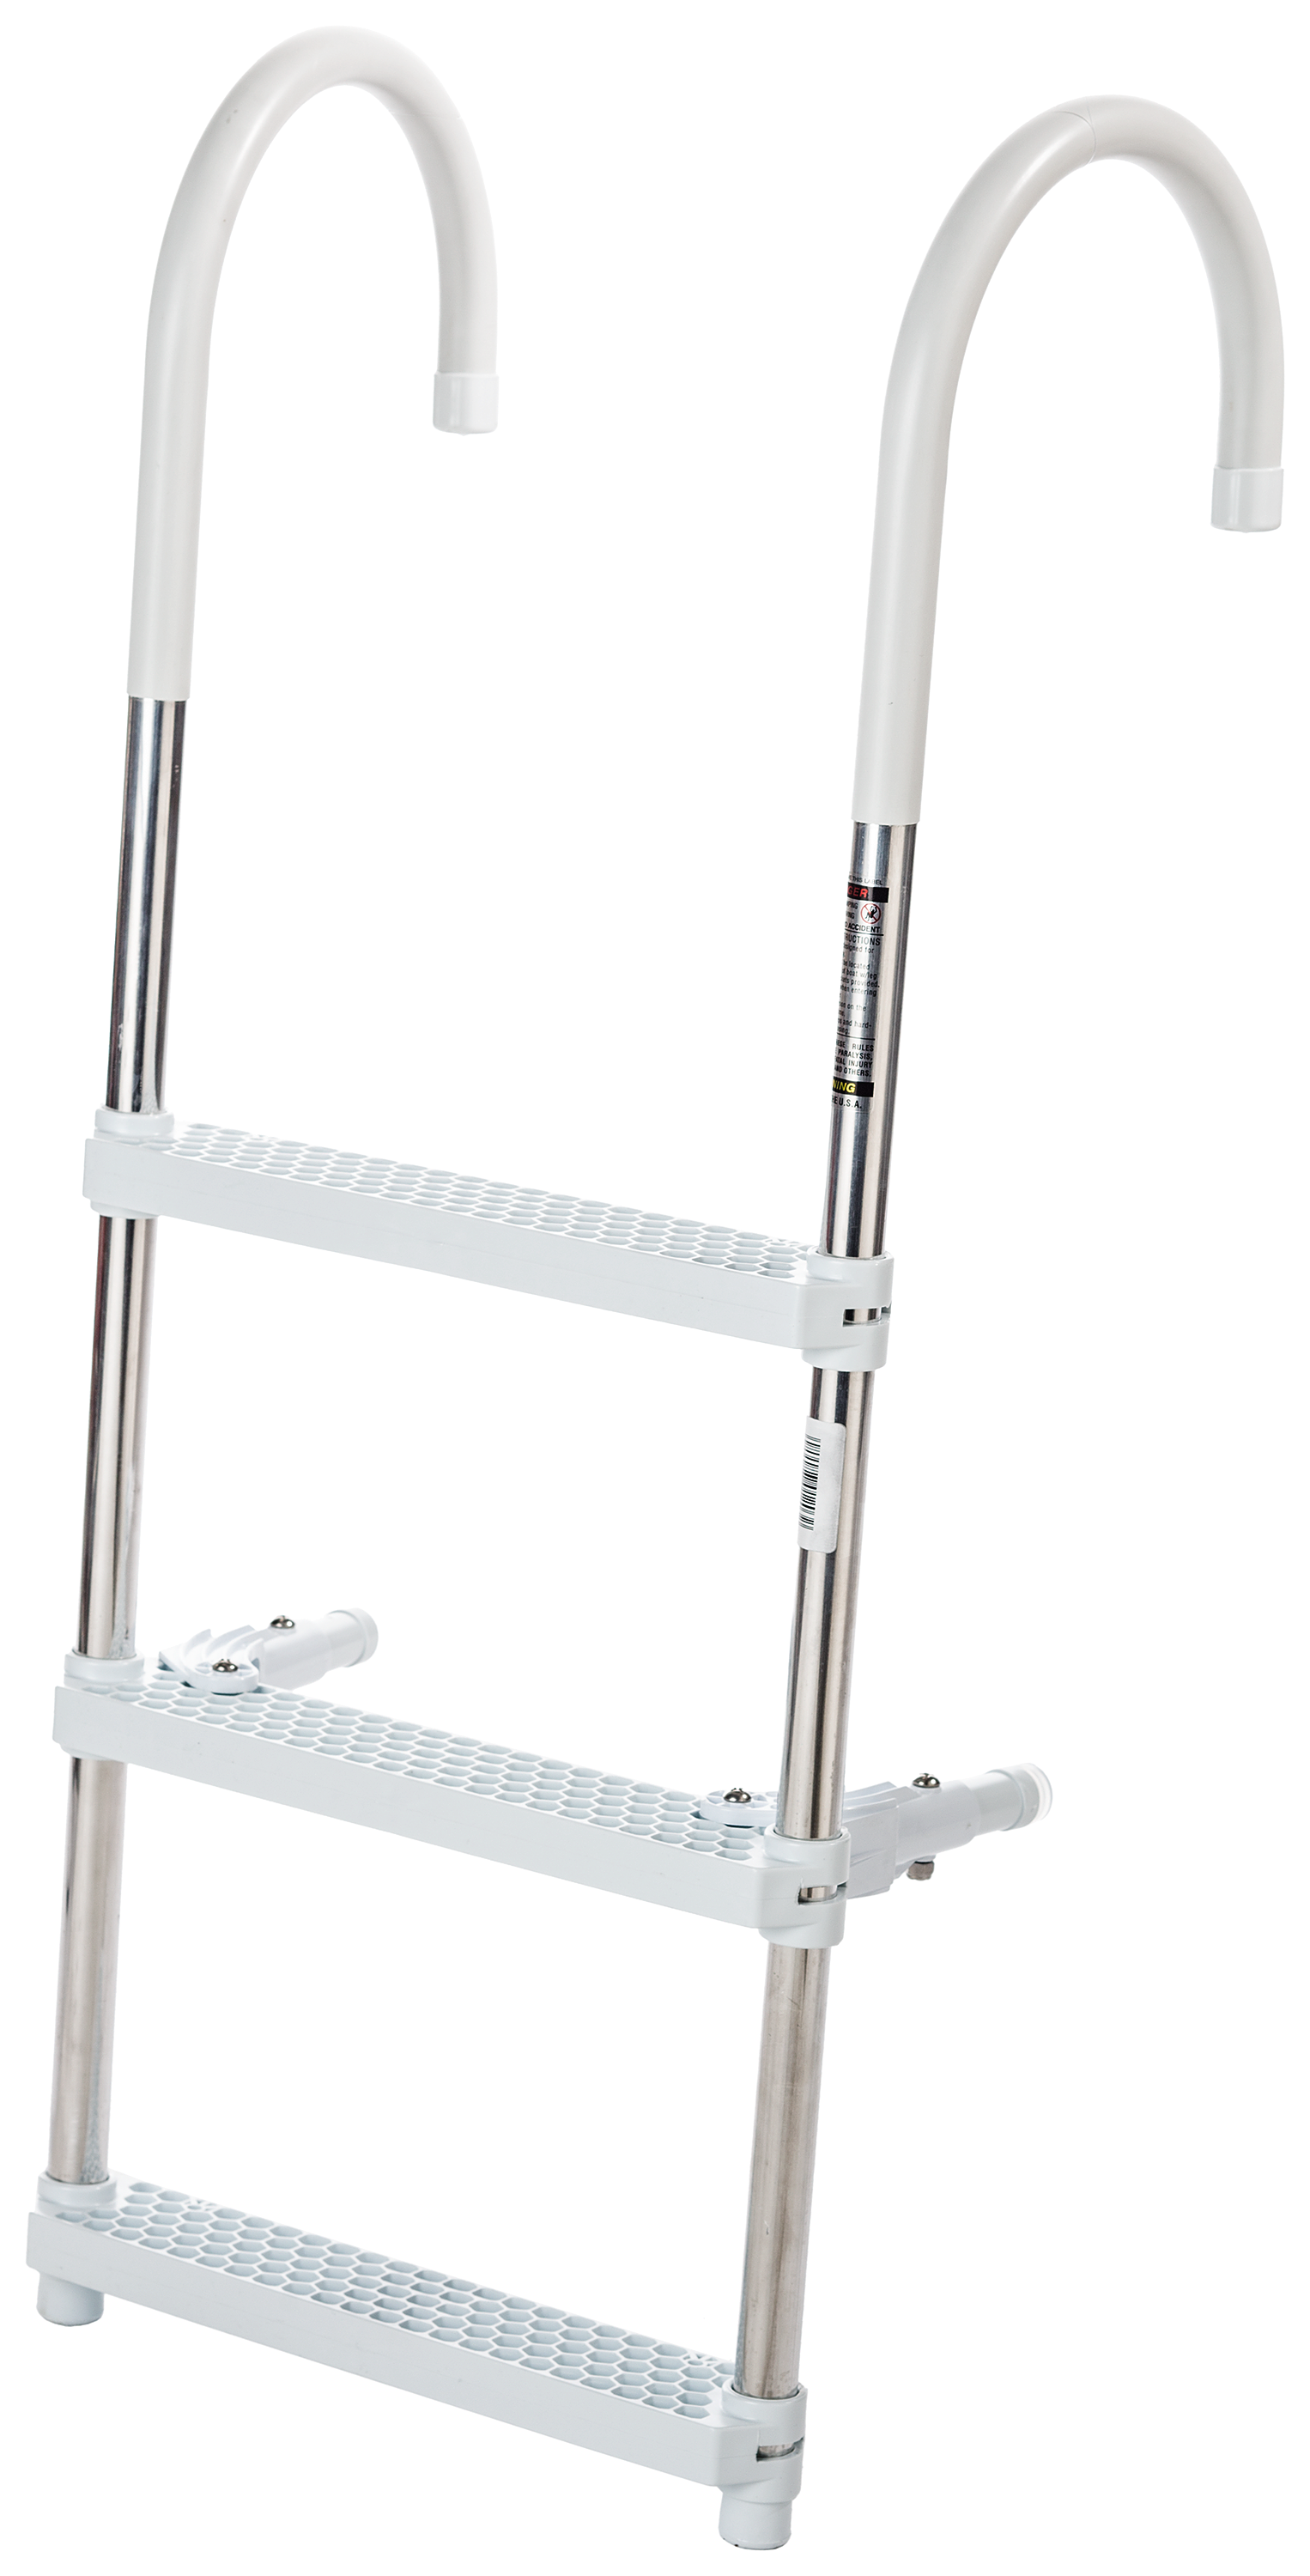 Bass Boat Ladder